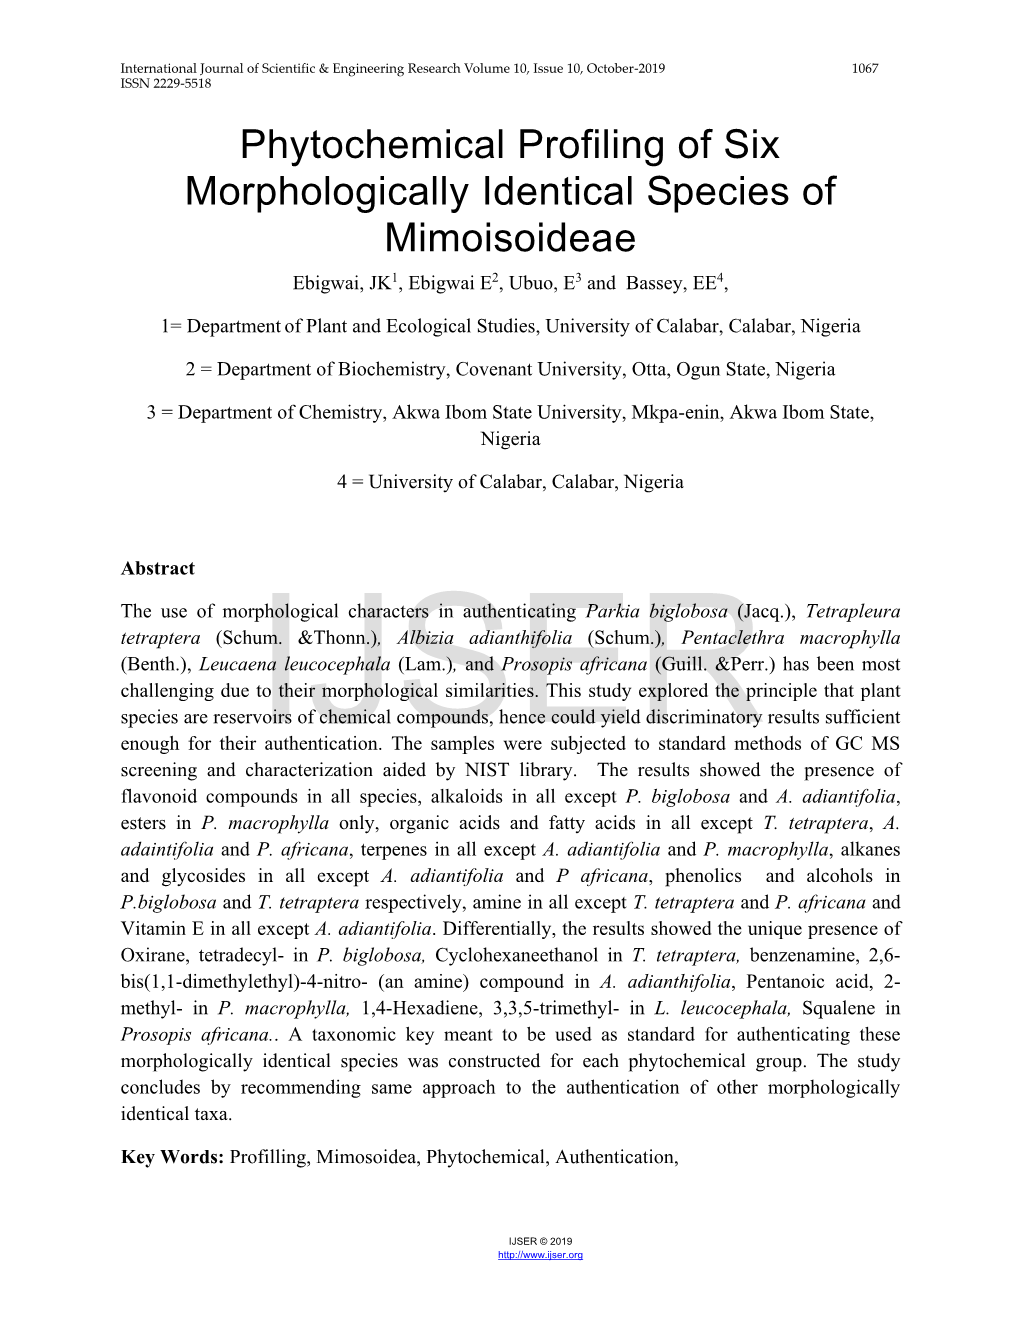 Phytochemical Profiling of Six Morphologically Identical Species of Mimoisoideae Ebigwai, JK1, Ebigwai E2, Ubuo, E3 and Bassey, EE4